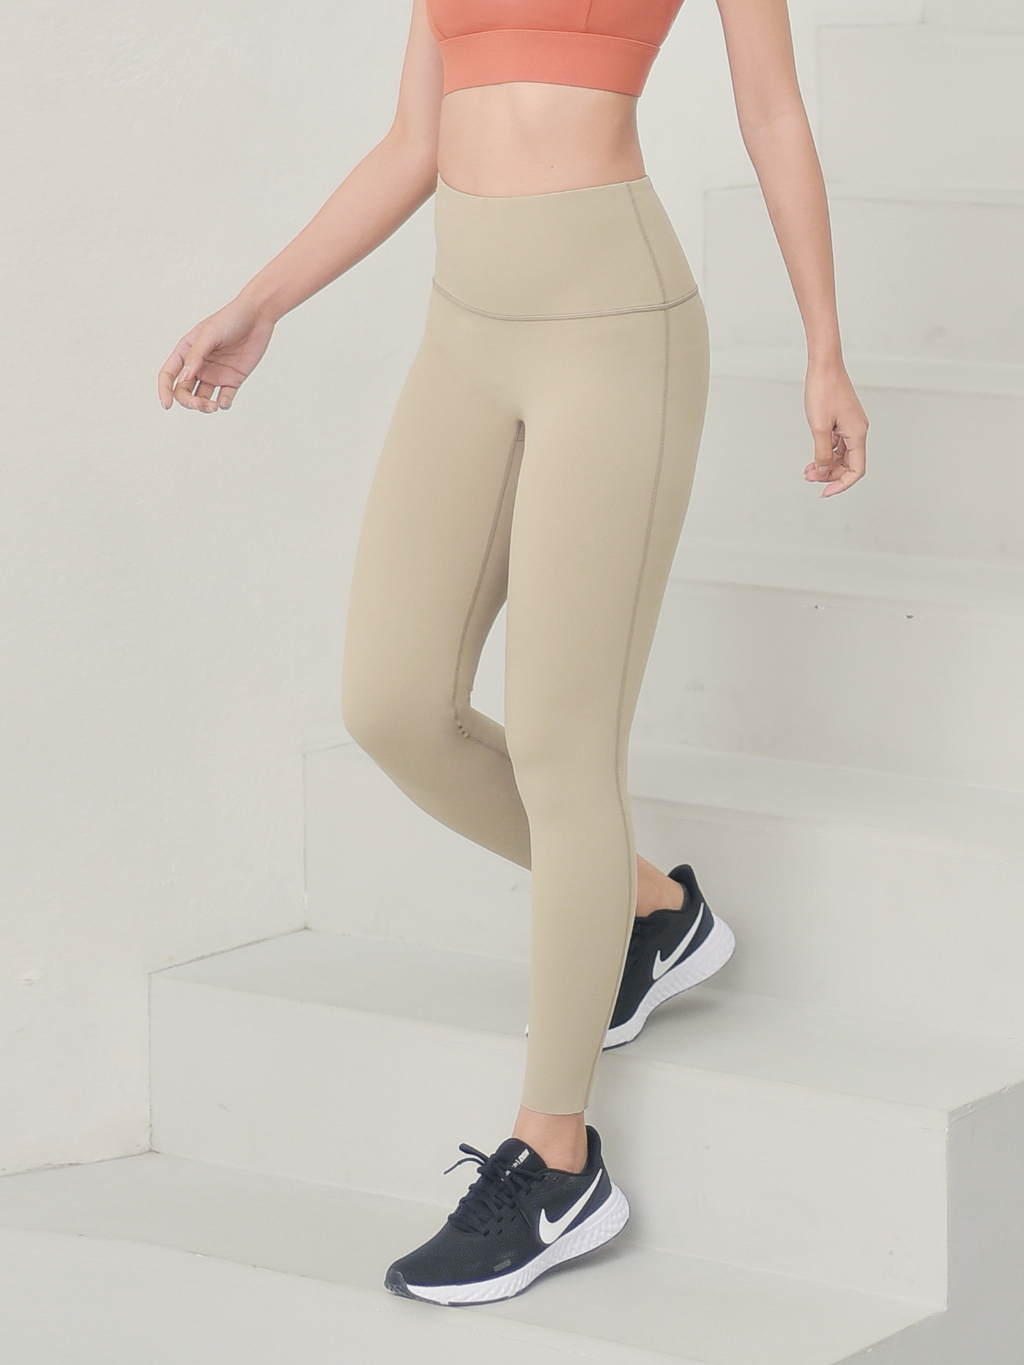 flexi-tights-กางเกงวิ่งผู้หญิง-กางเกงออกกำลังกายขายาว-กางเกงโยคะเอวสูง-ผ้า-lycra-ยืดหยุ่นสูง-ใส่กระชับ-fitmesportswear